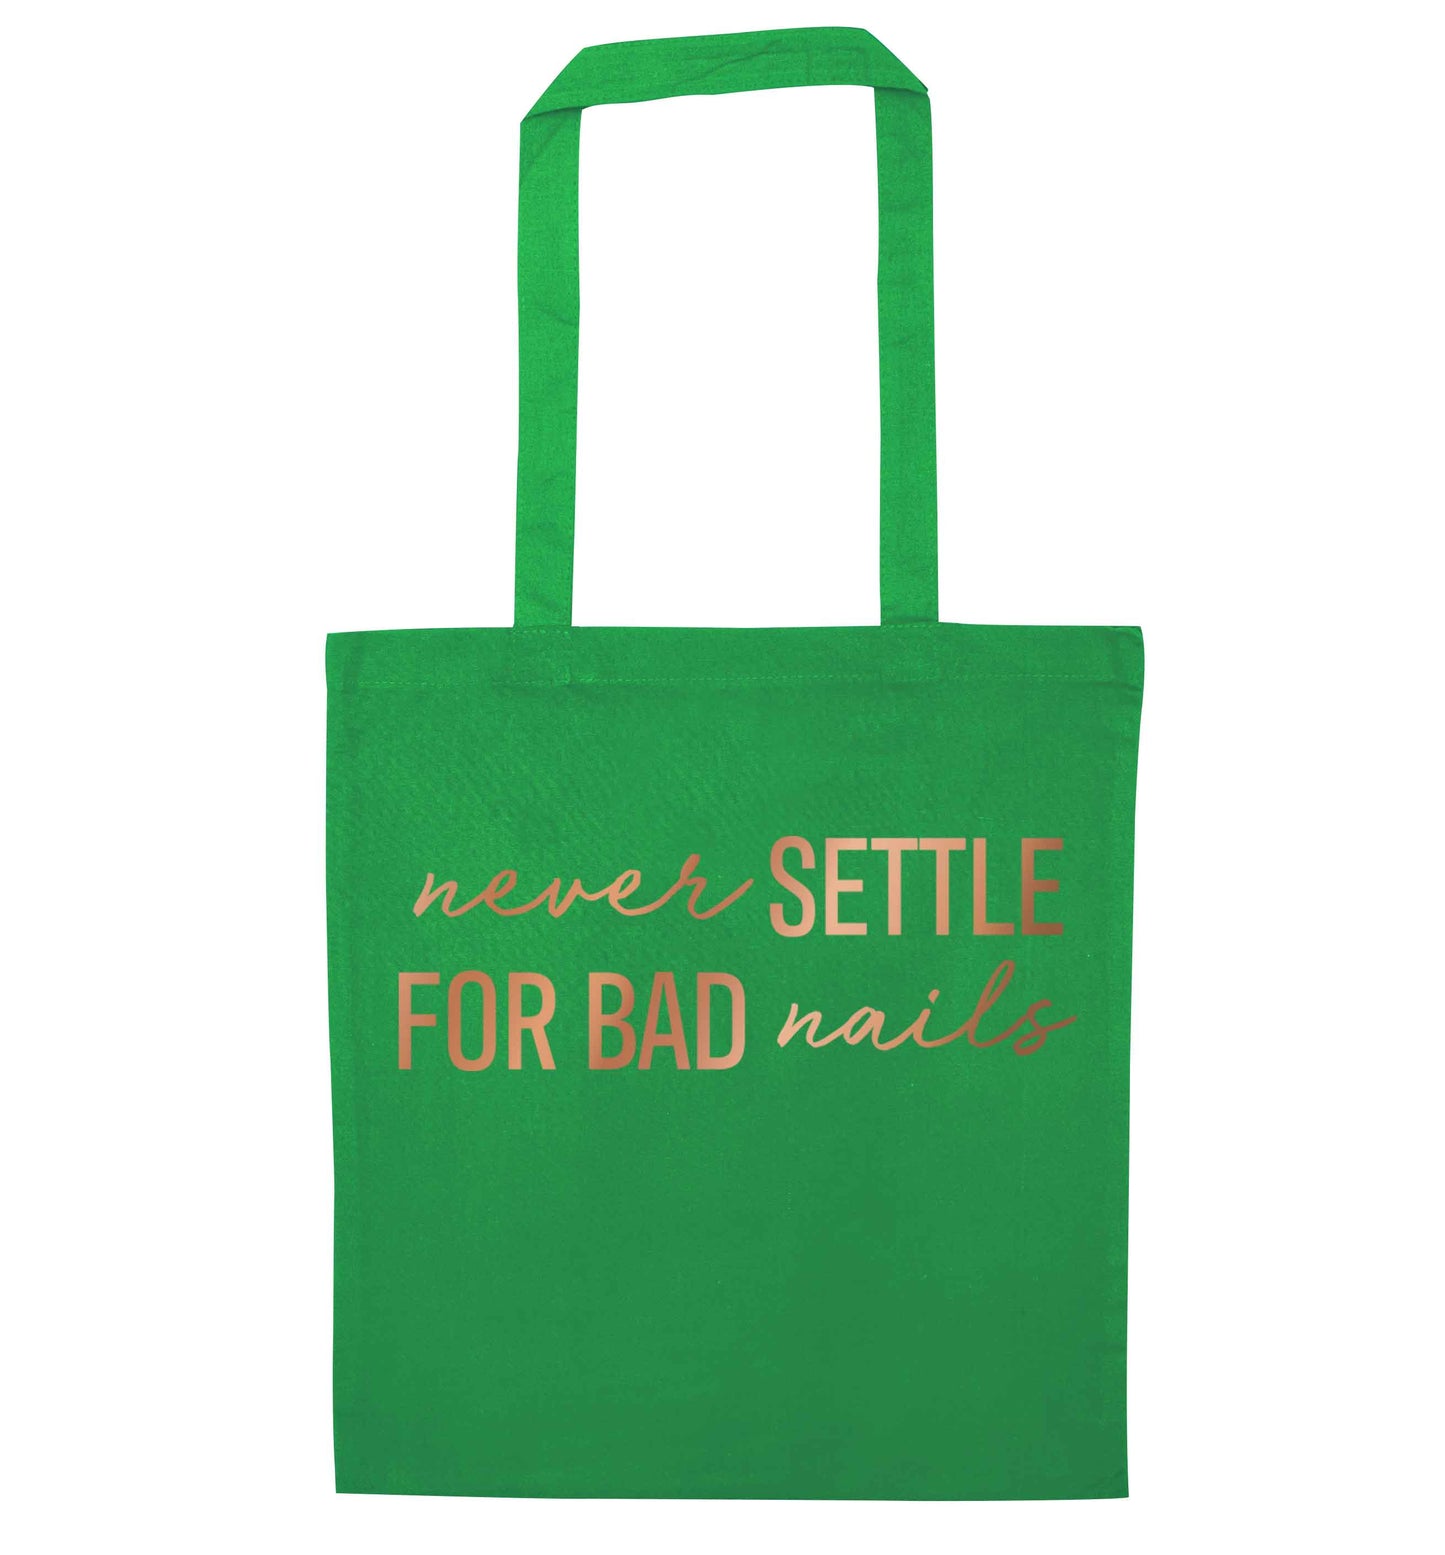 Never settle for bad nails - rose gold green tote bag